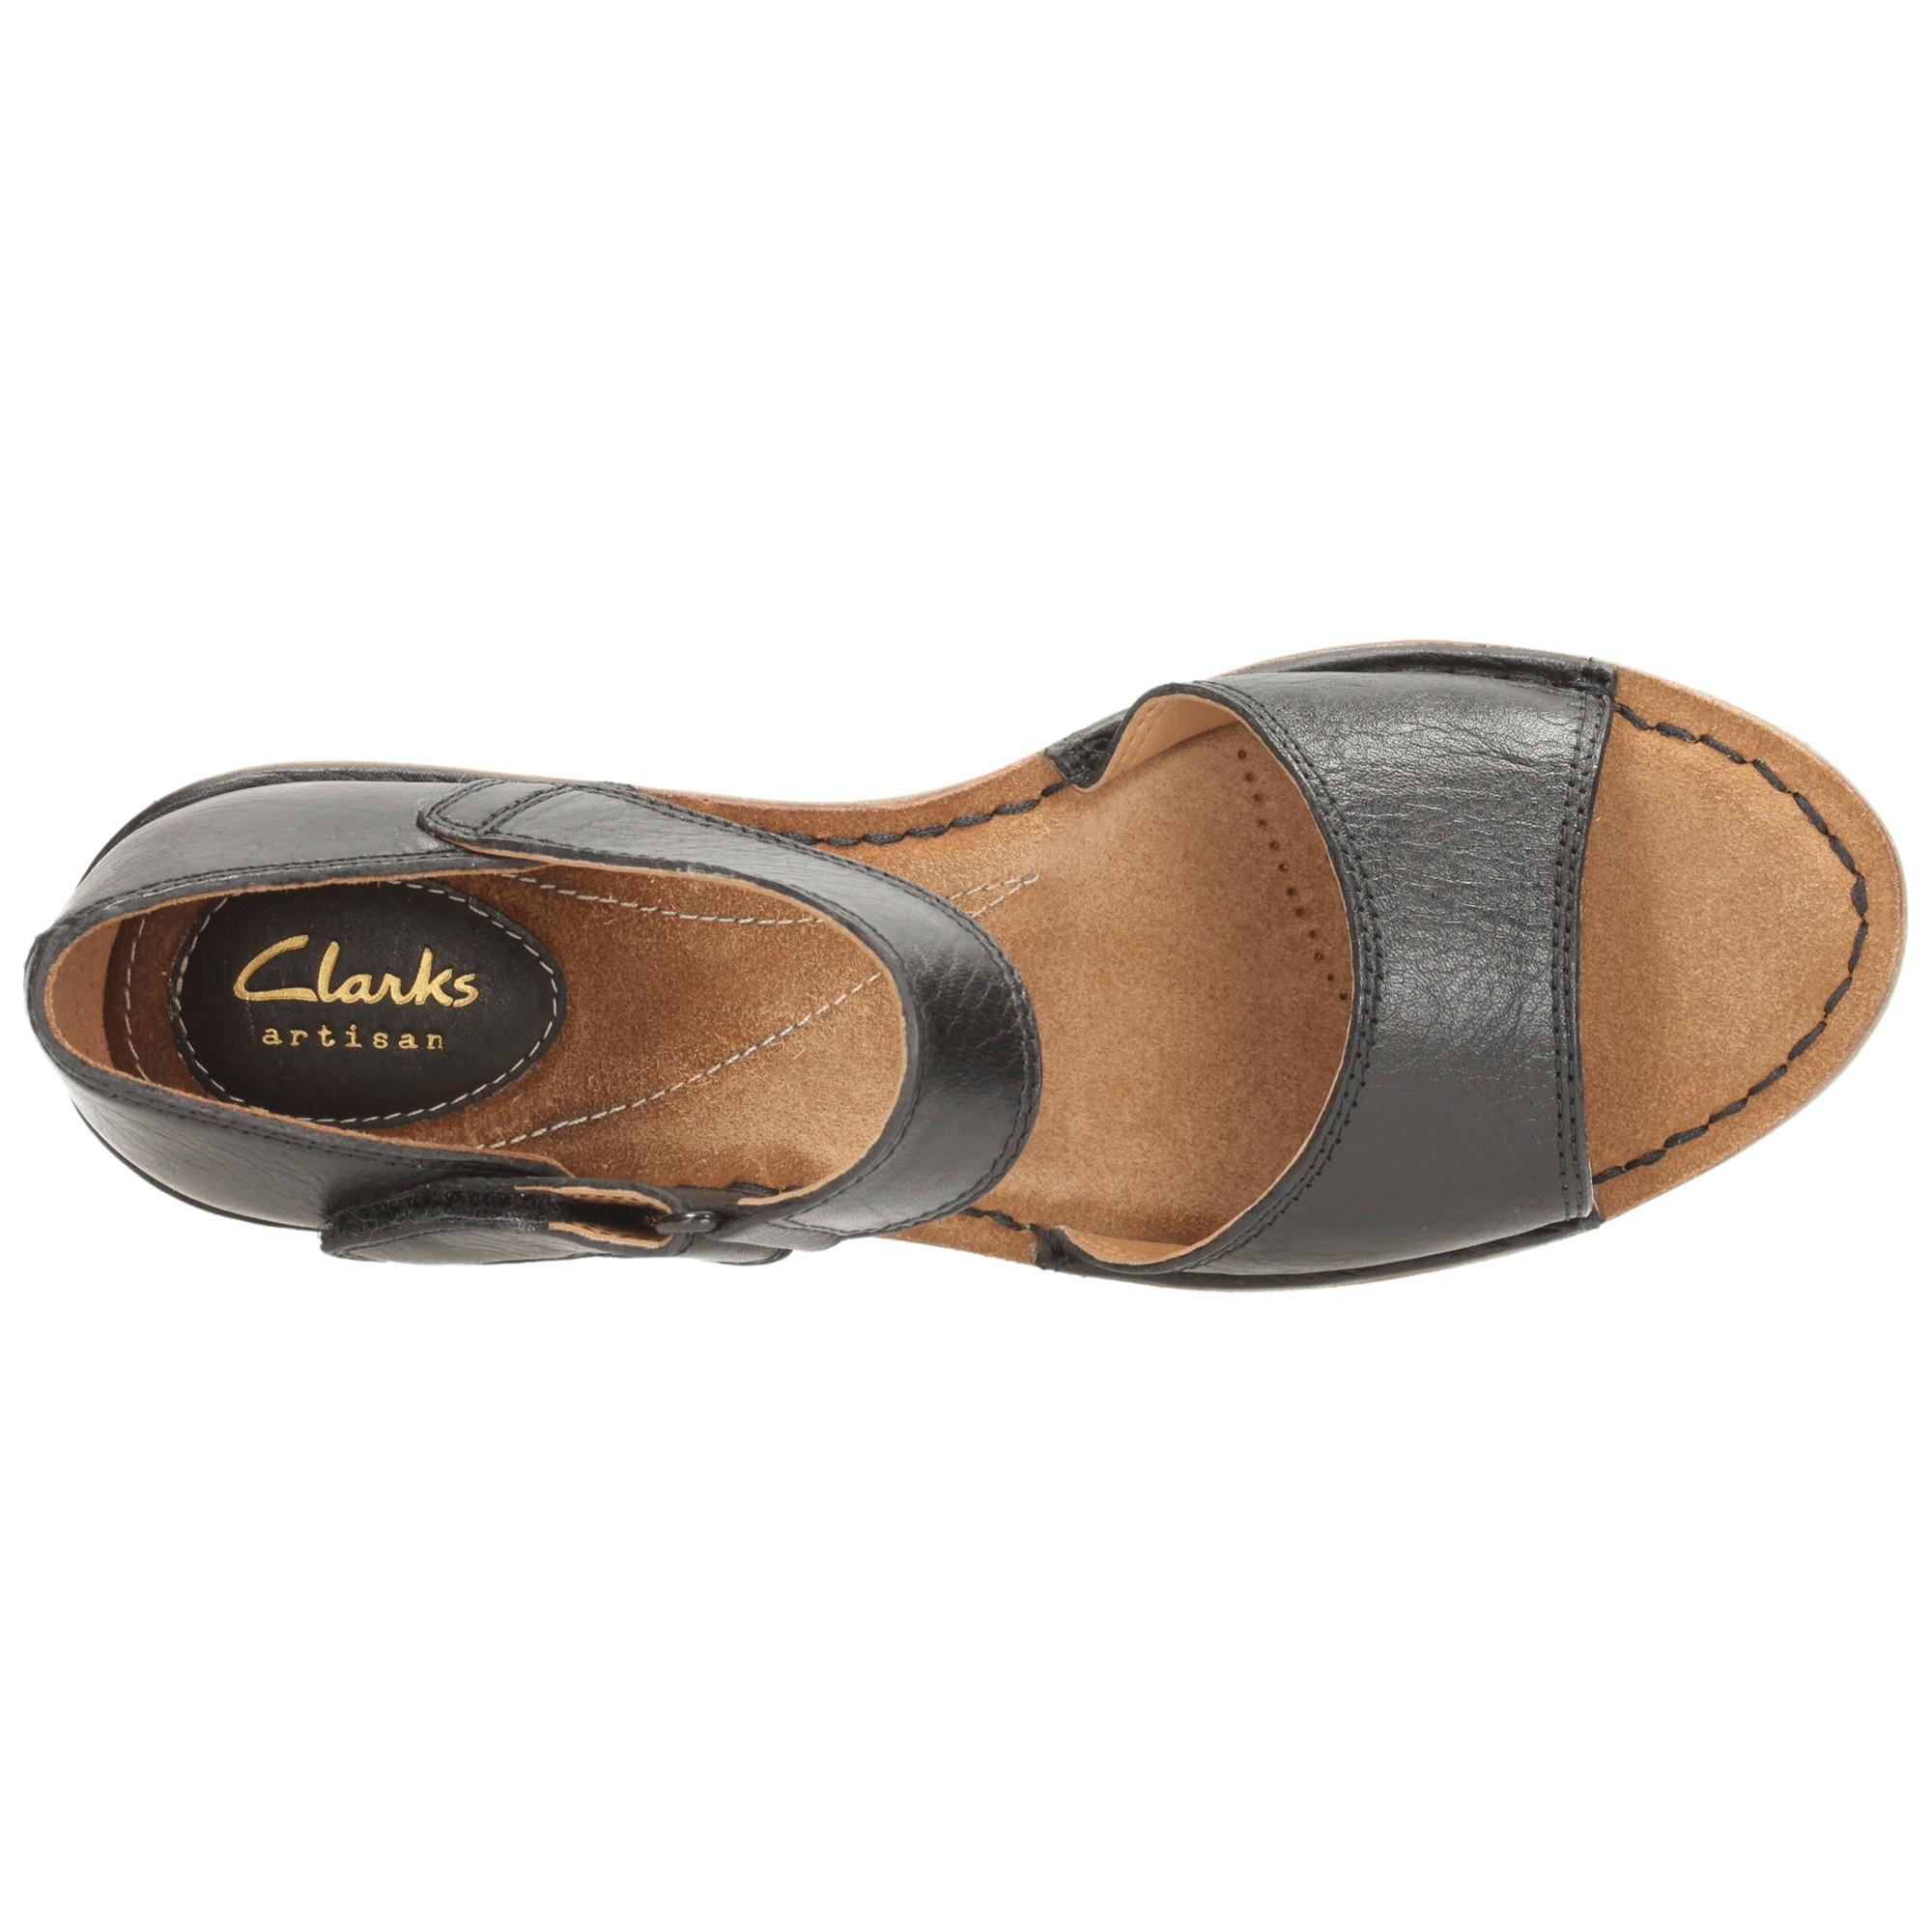 clarks orient sea sandals